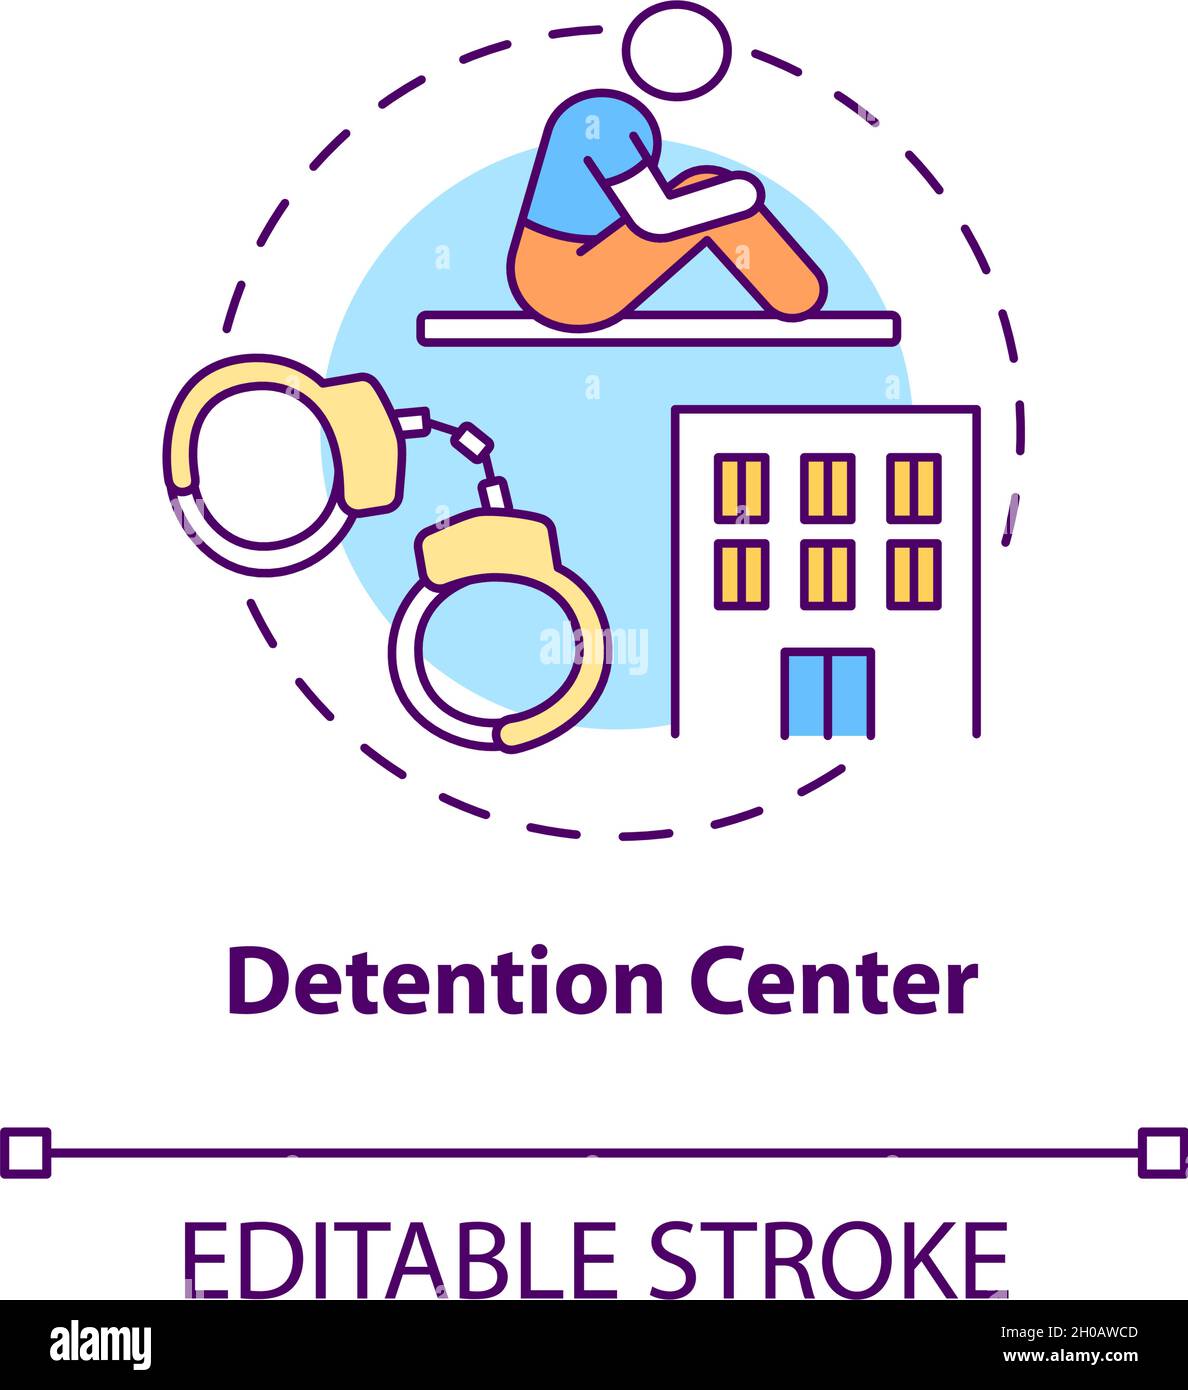 Detention center concept icon Stock Vector